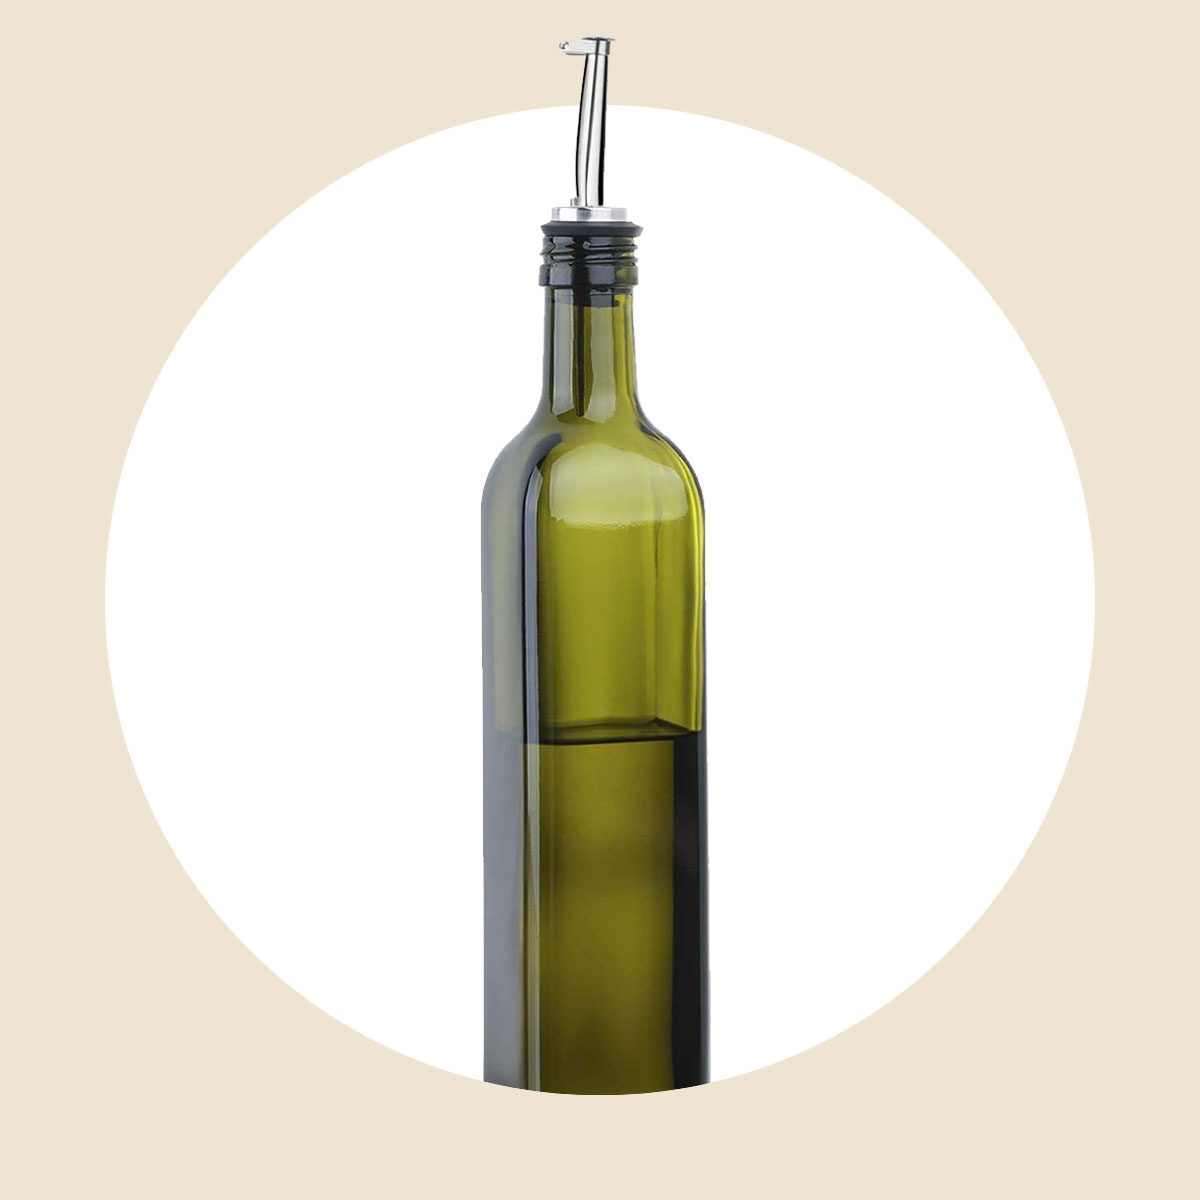 The Best Olive Oil Dispenser Bottle, According to 16,000